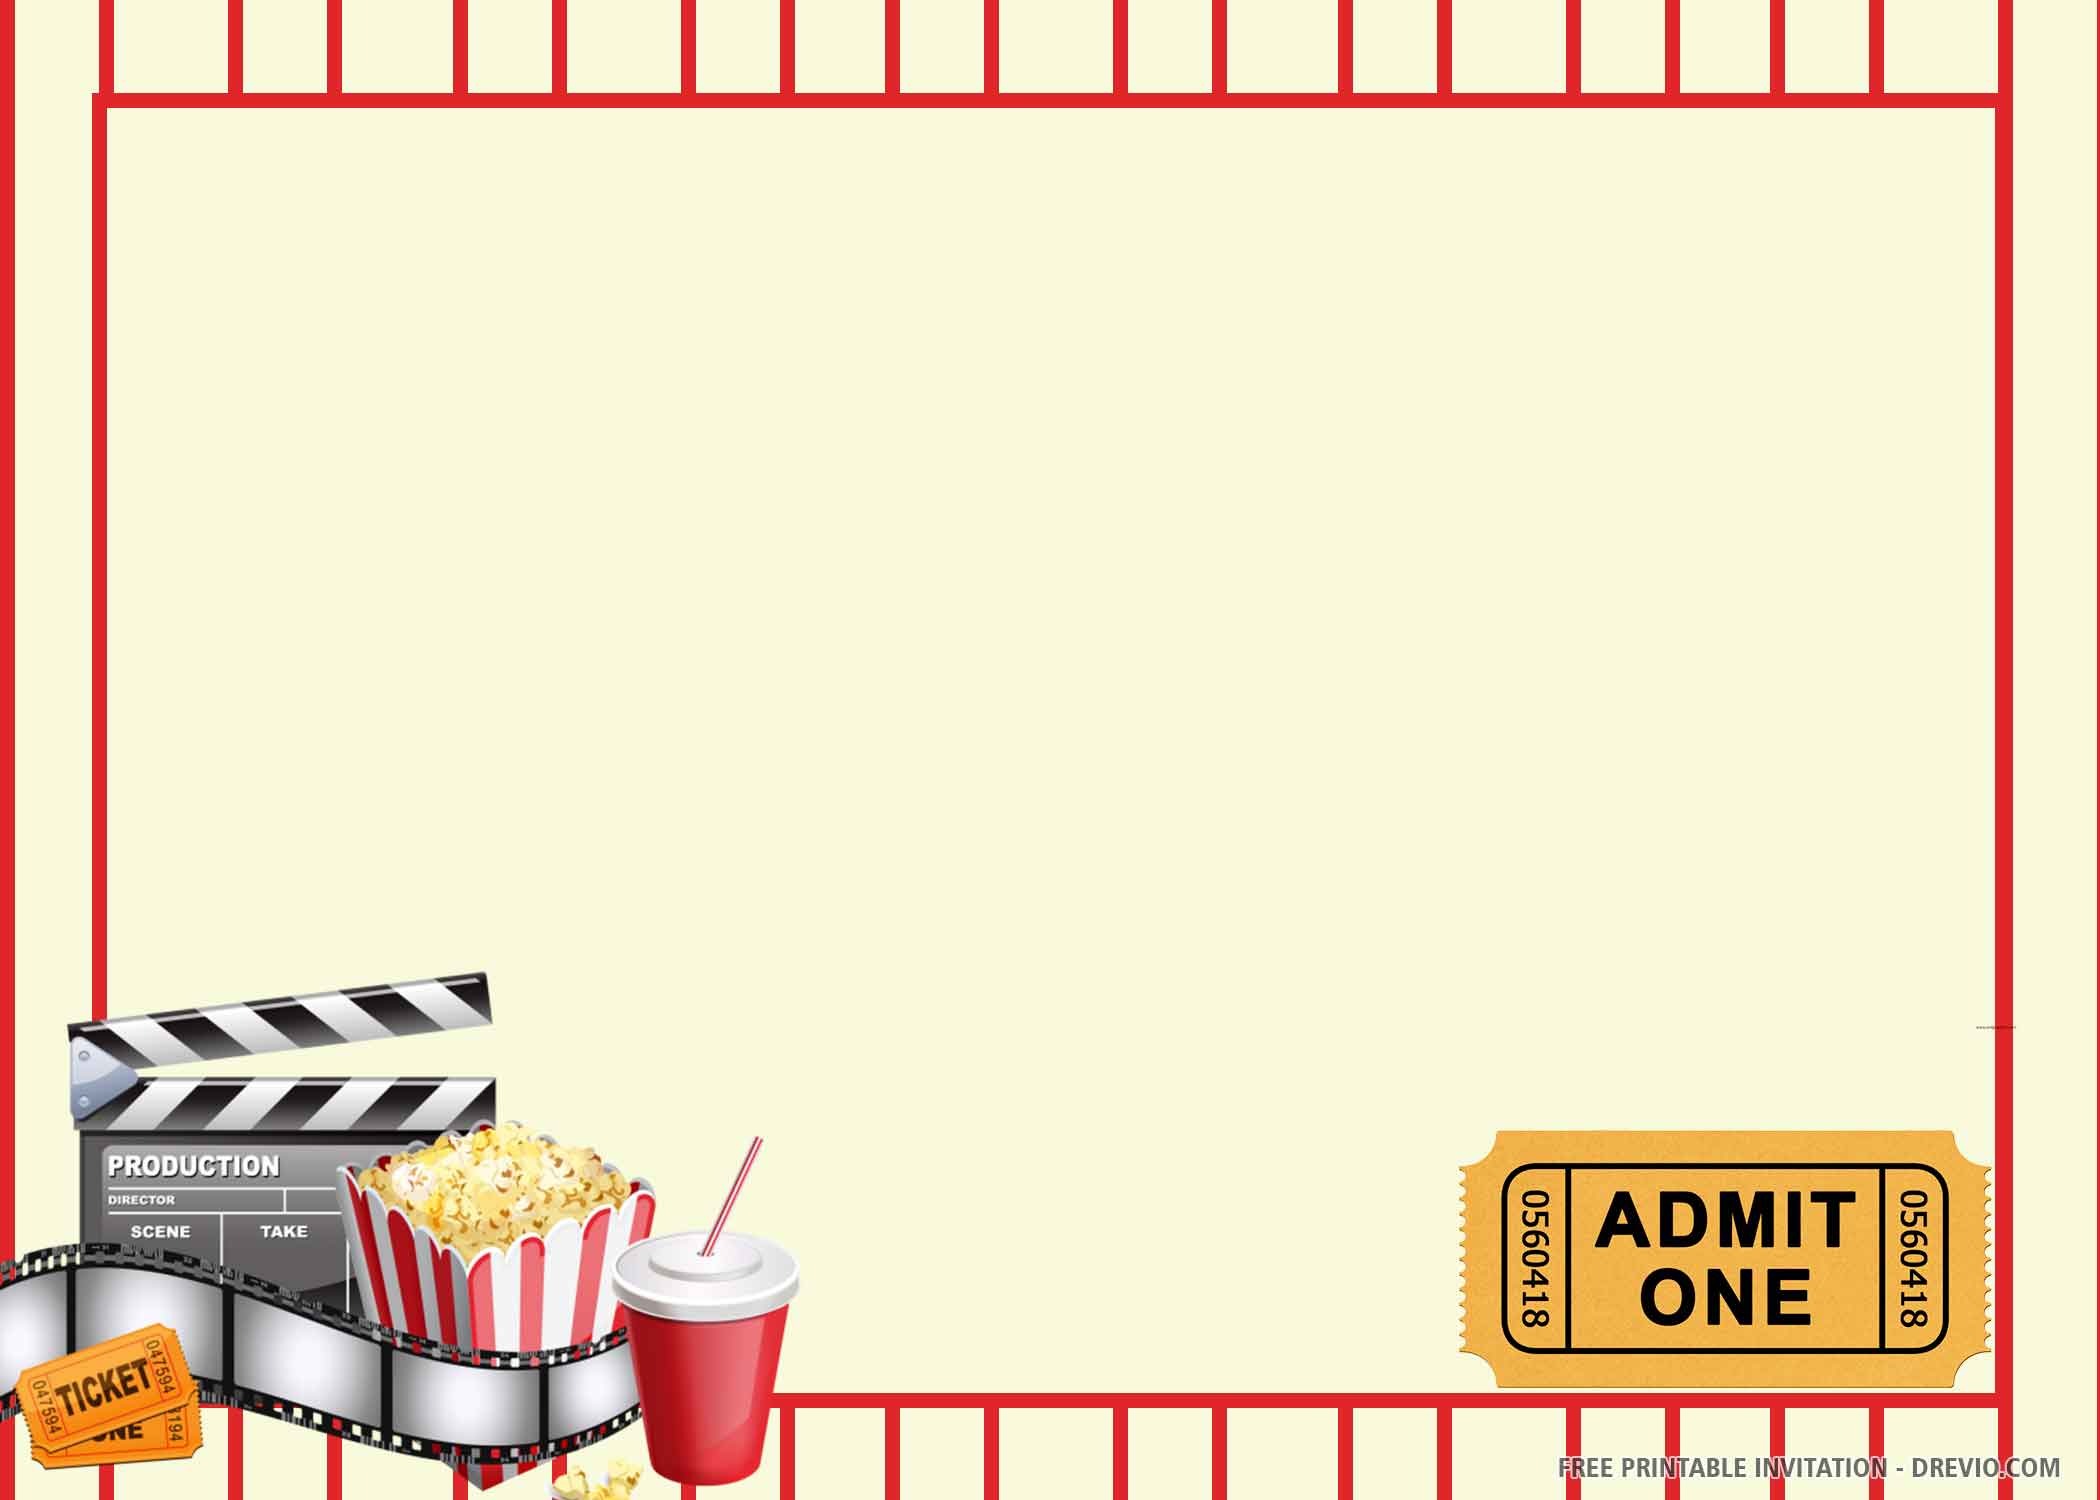  FREE PRINTABLE Movie Ticket Birthday Invitation Template Download Hundreds FREE PRINTABLE